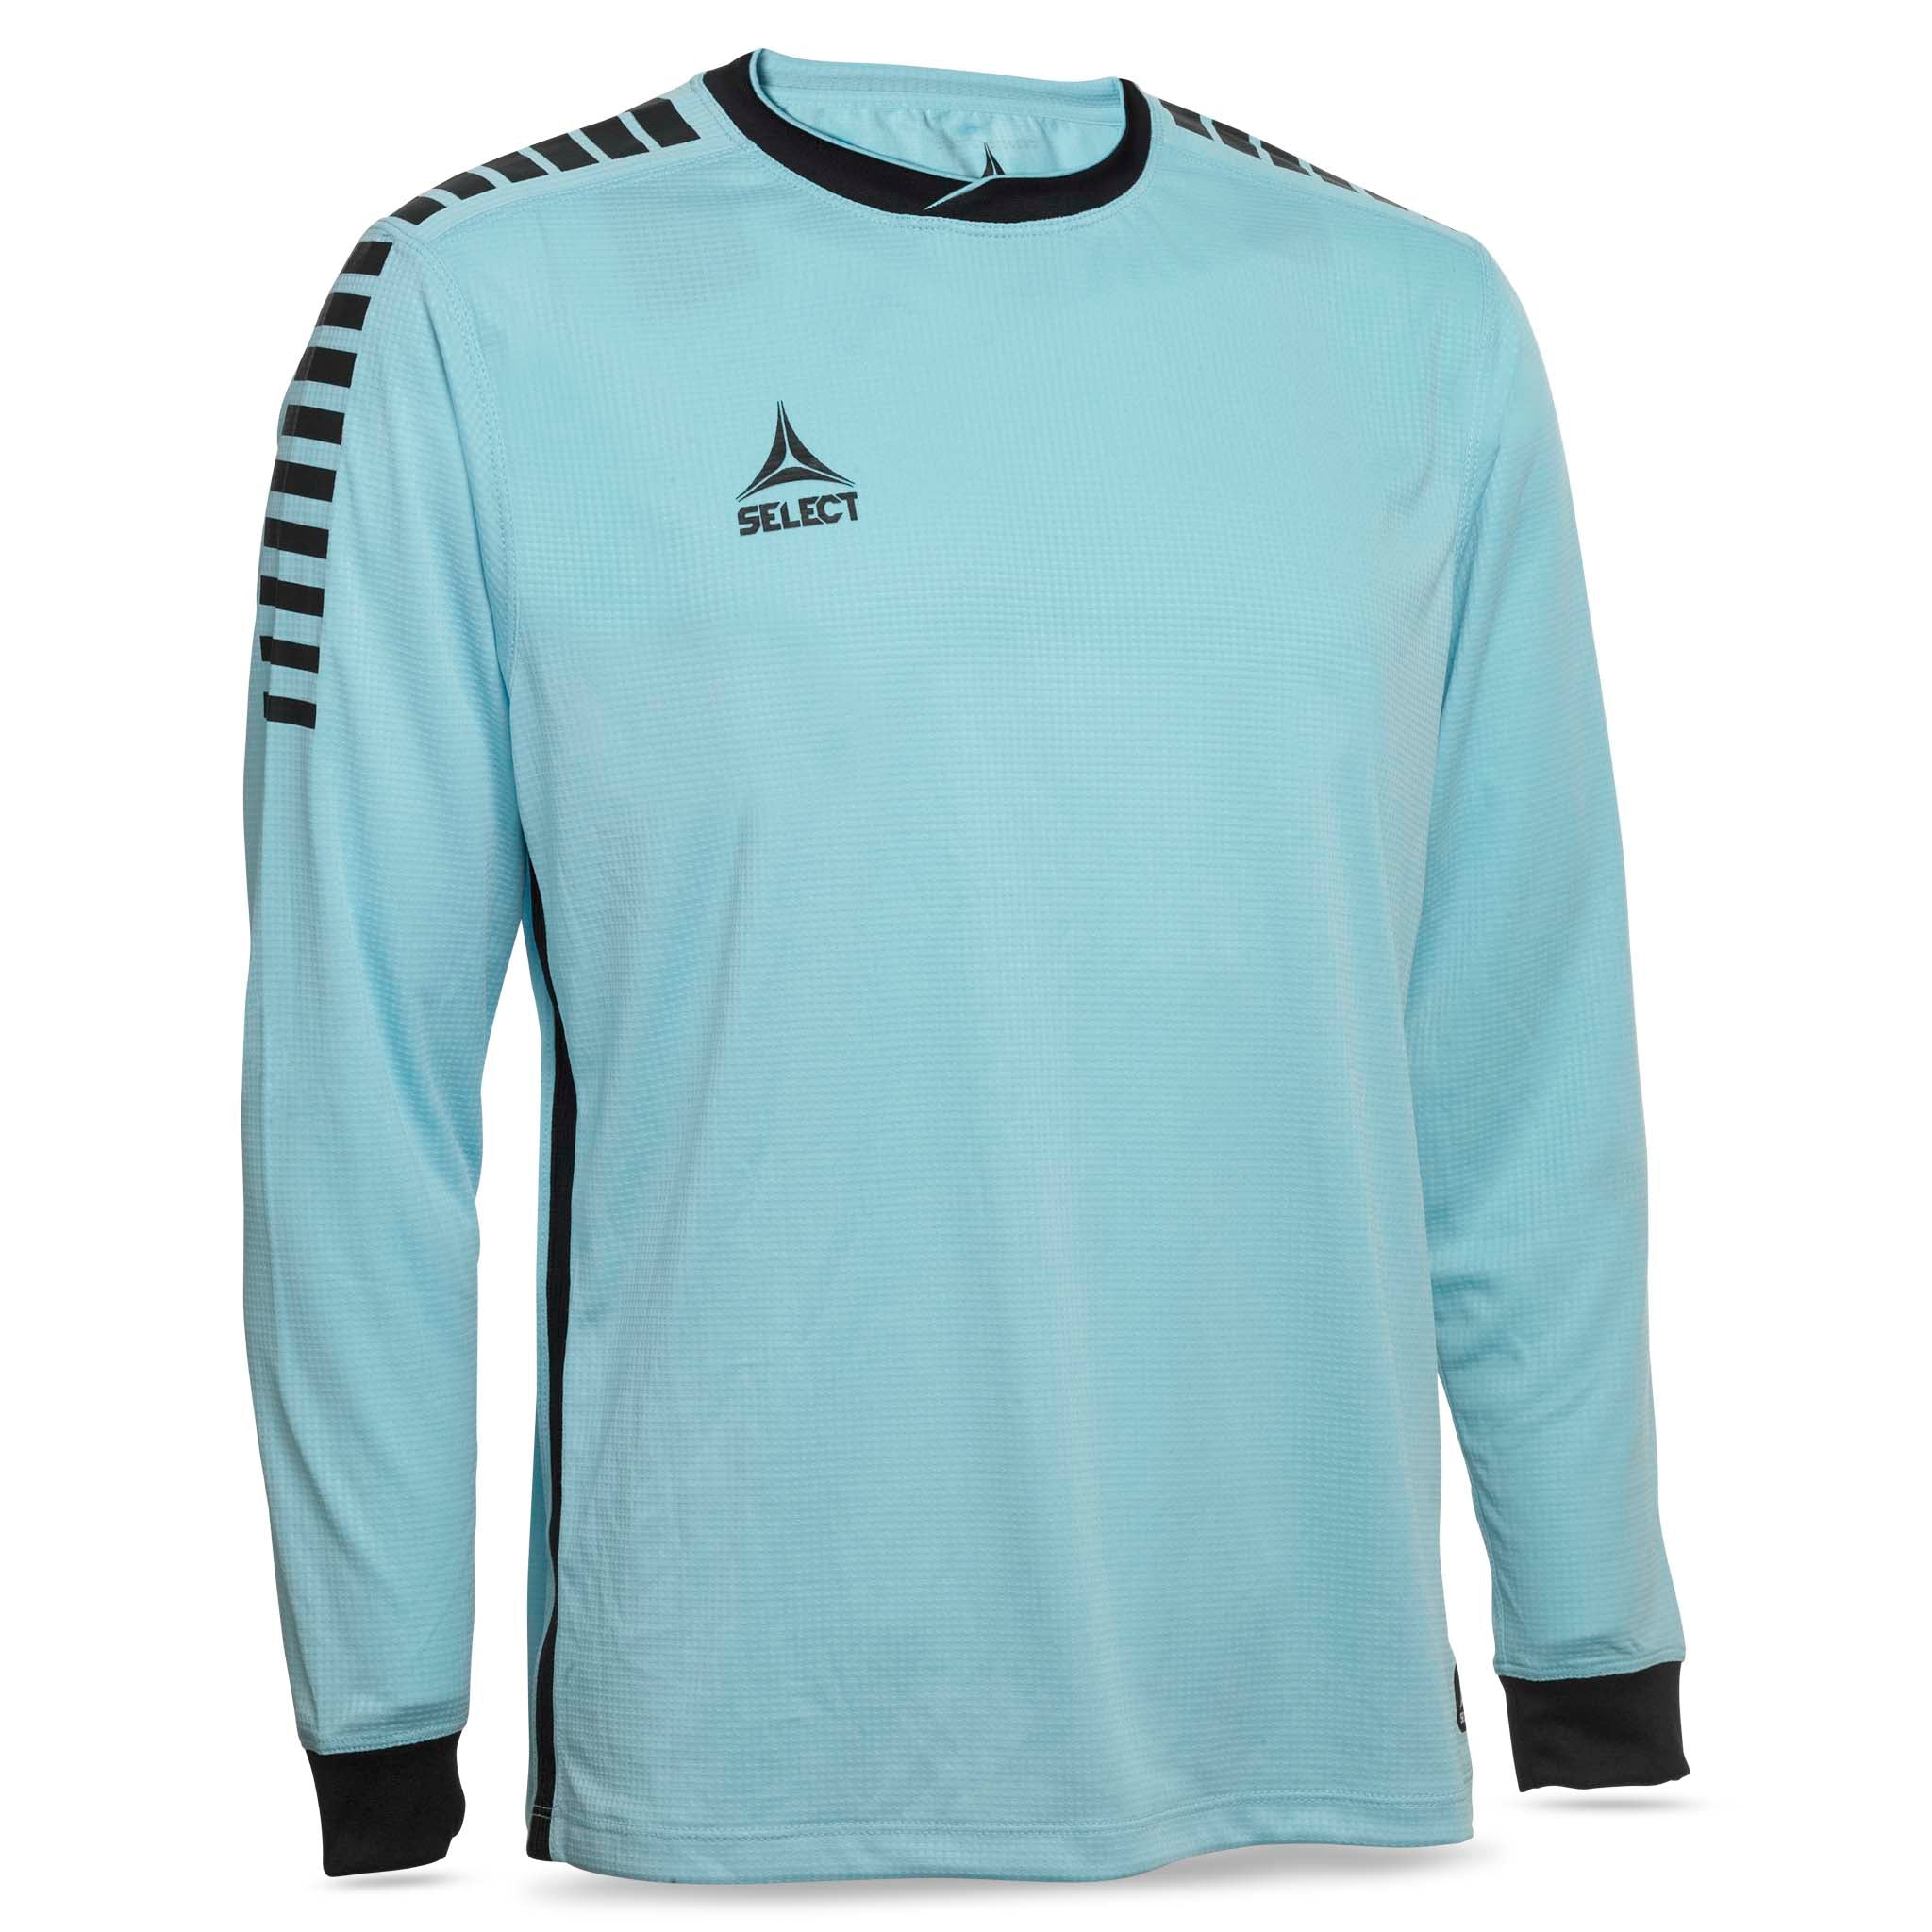 Goalkeeper shirt - Monaco #colour_blue